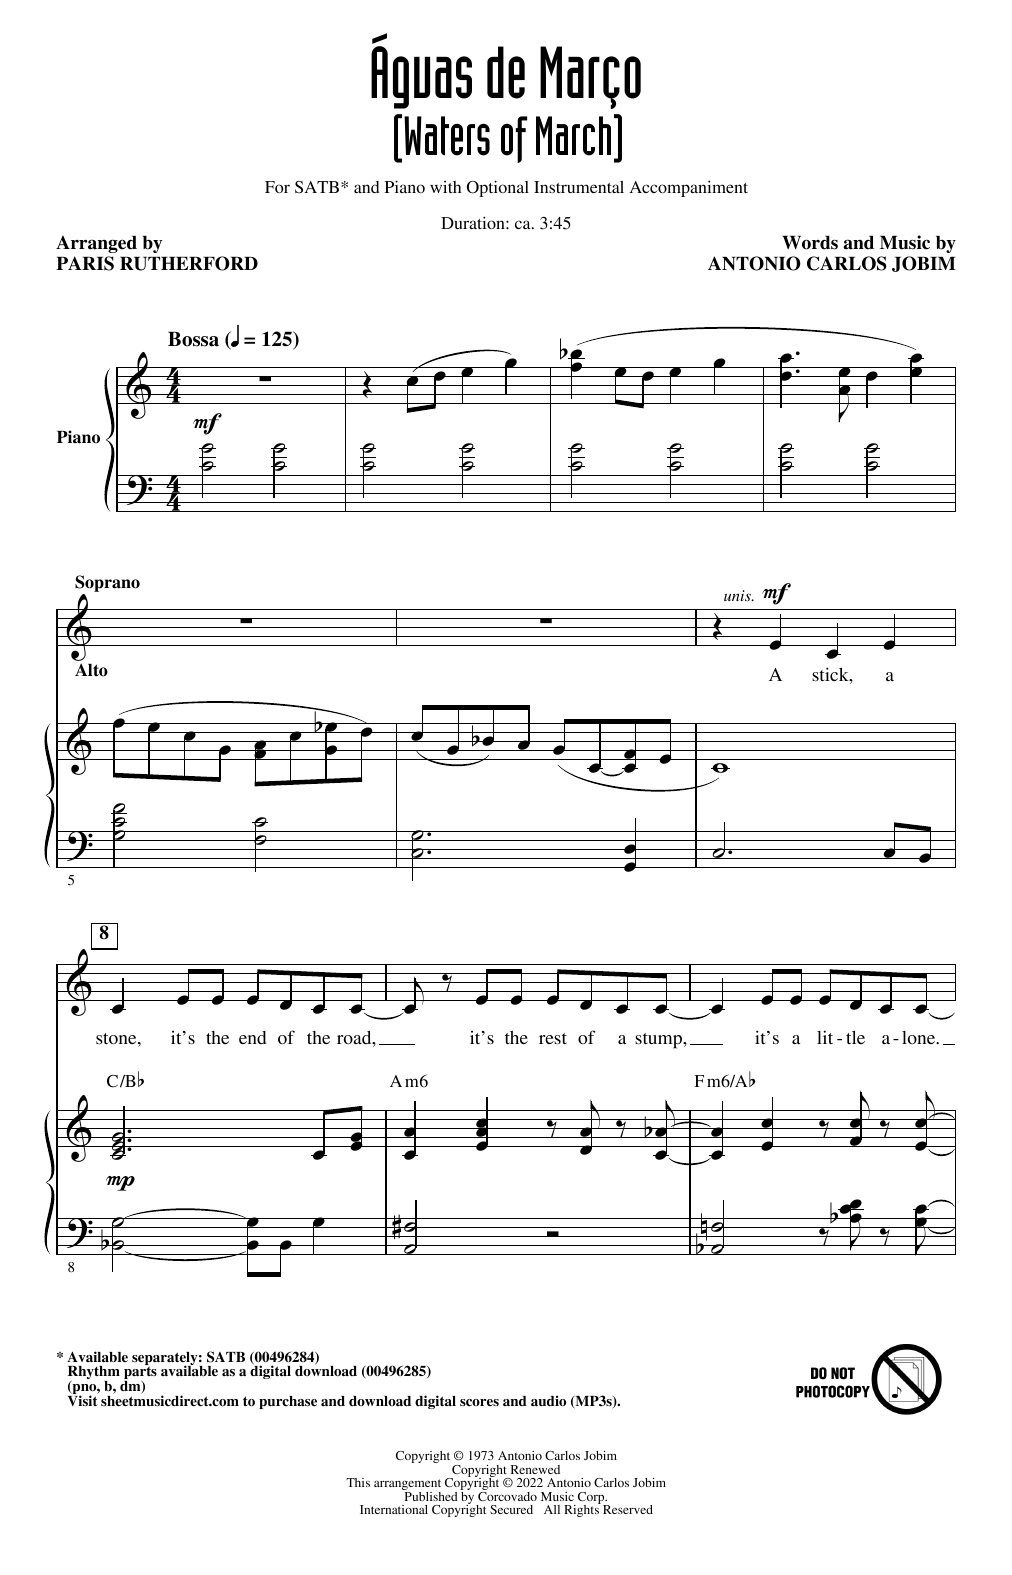 Antonio Carlos Jobim Águas De Março (Waters Of March) (arr. Paris Rutherford) Sheet Music Notes & Chords for SATB Choir - Download or Print PDF